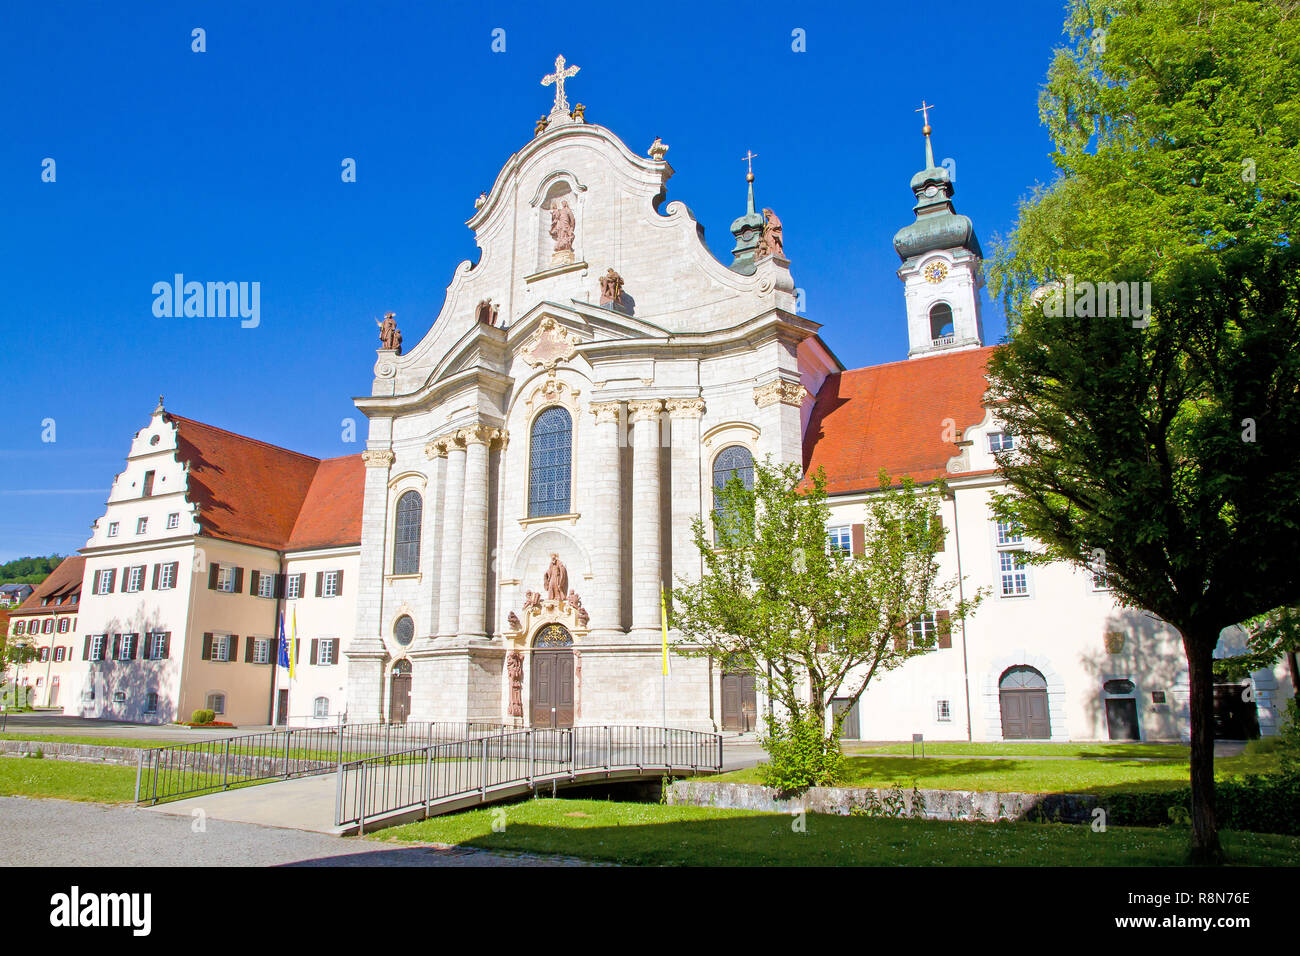 Monastery of Zwiefalten, Germany Stock Photo